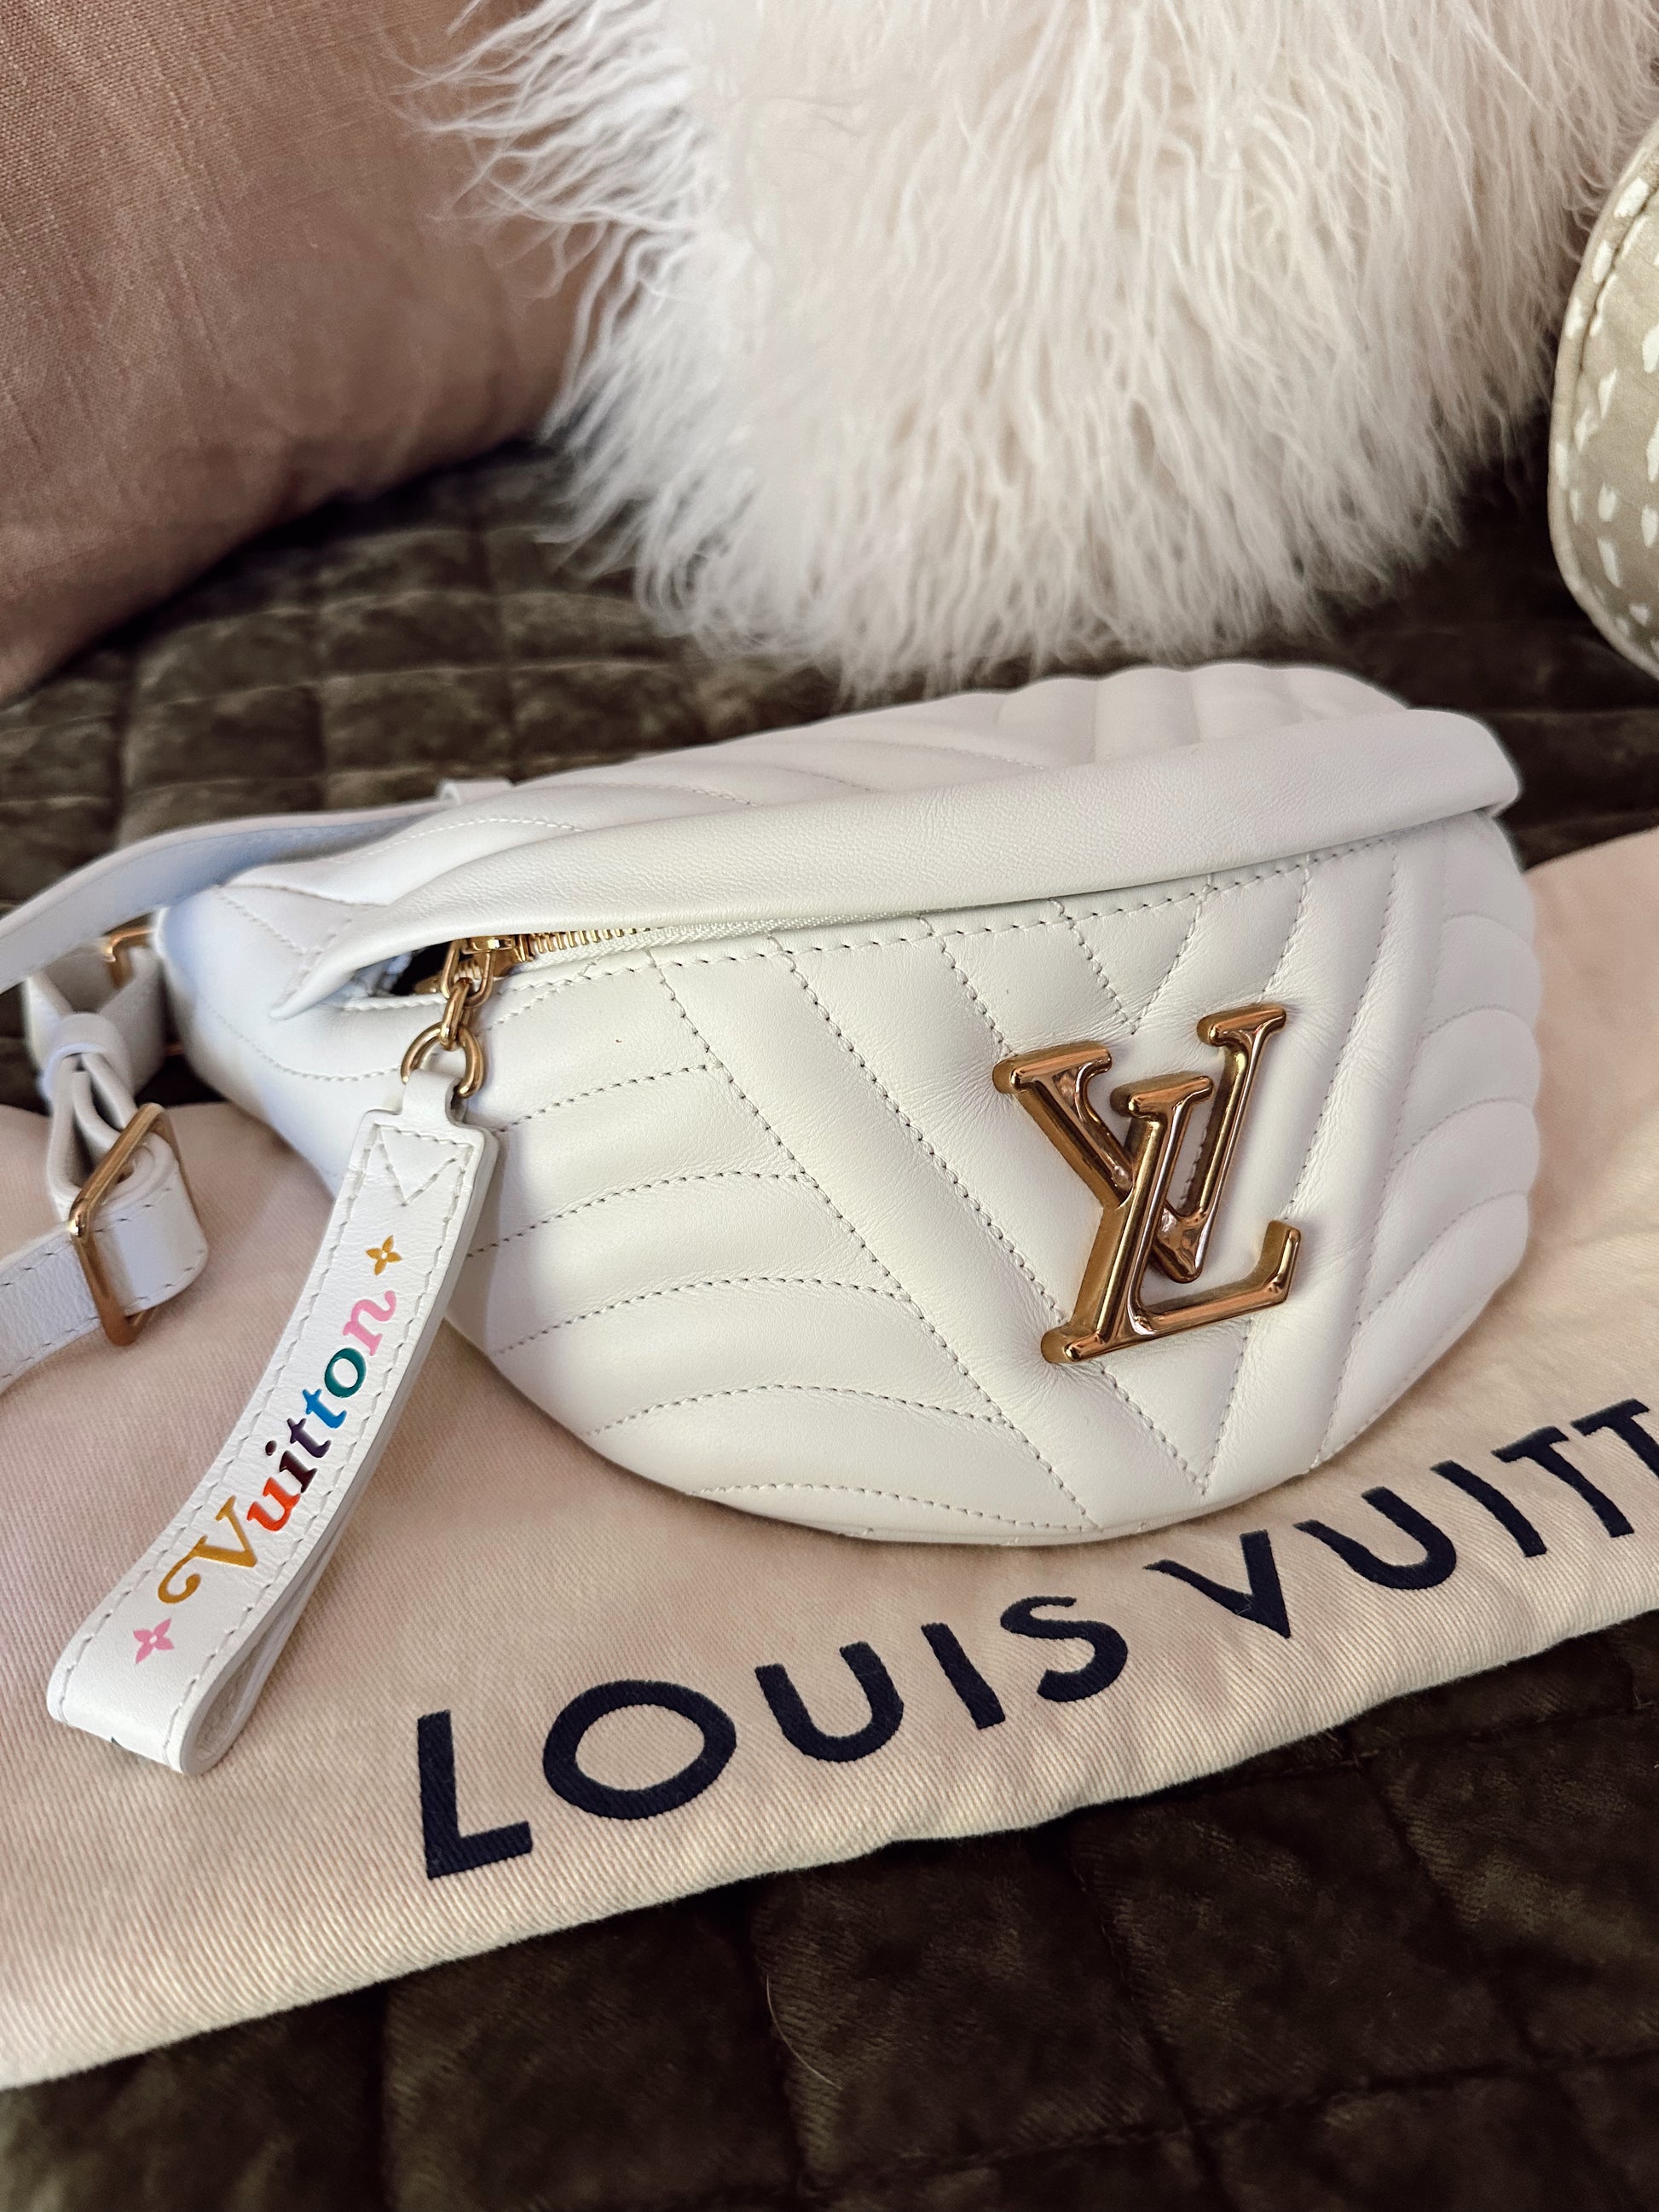 Louis Vuitton Bumbag DISCONTINUED, but options?!